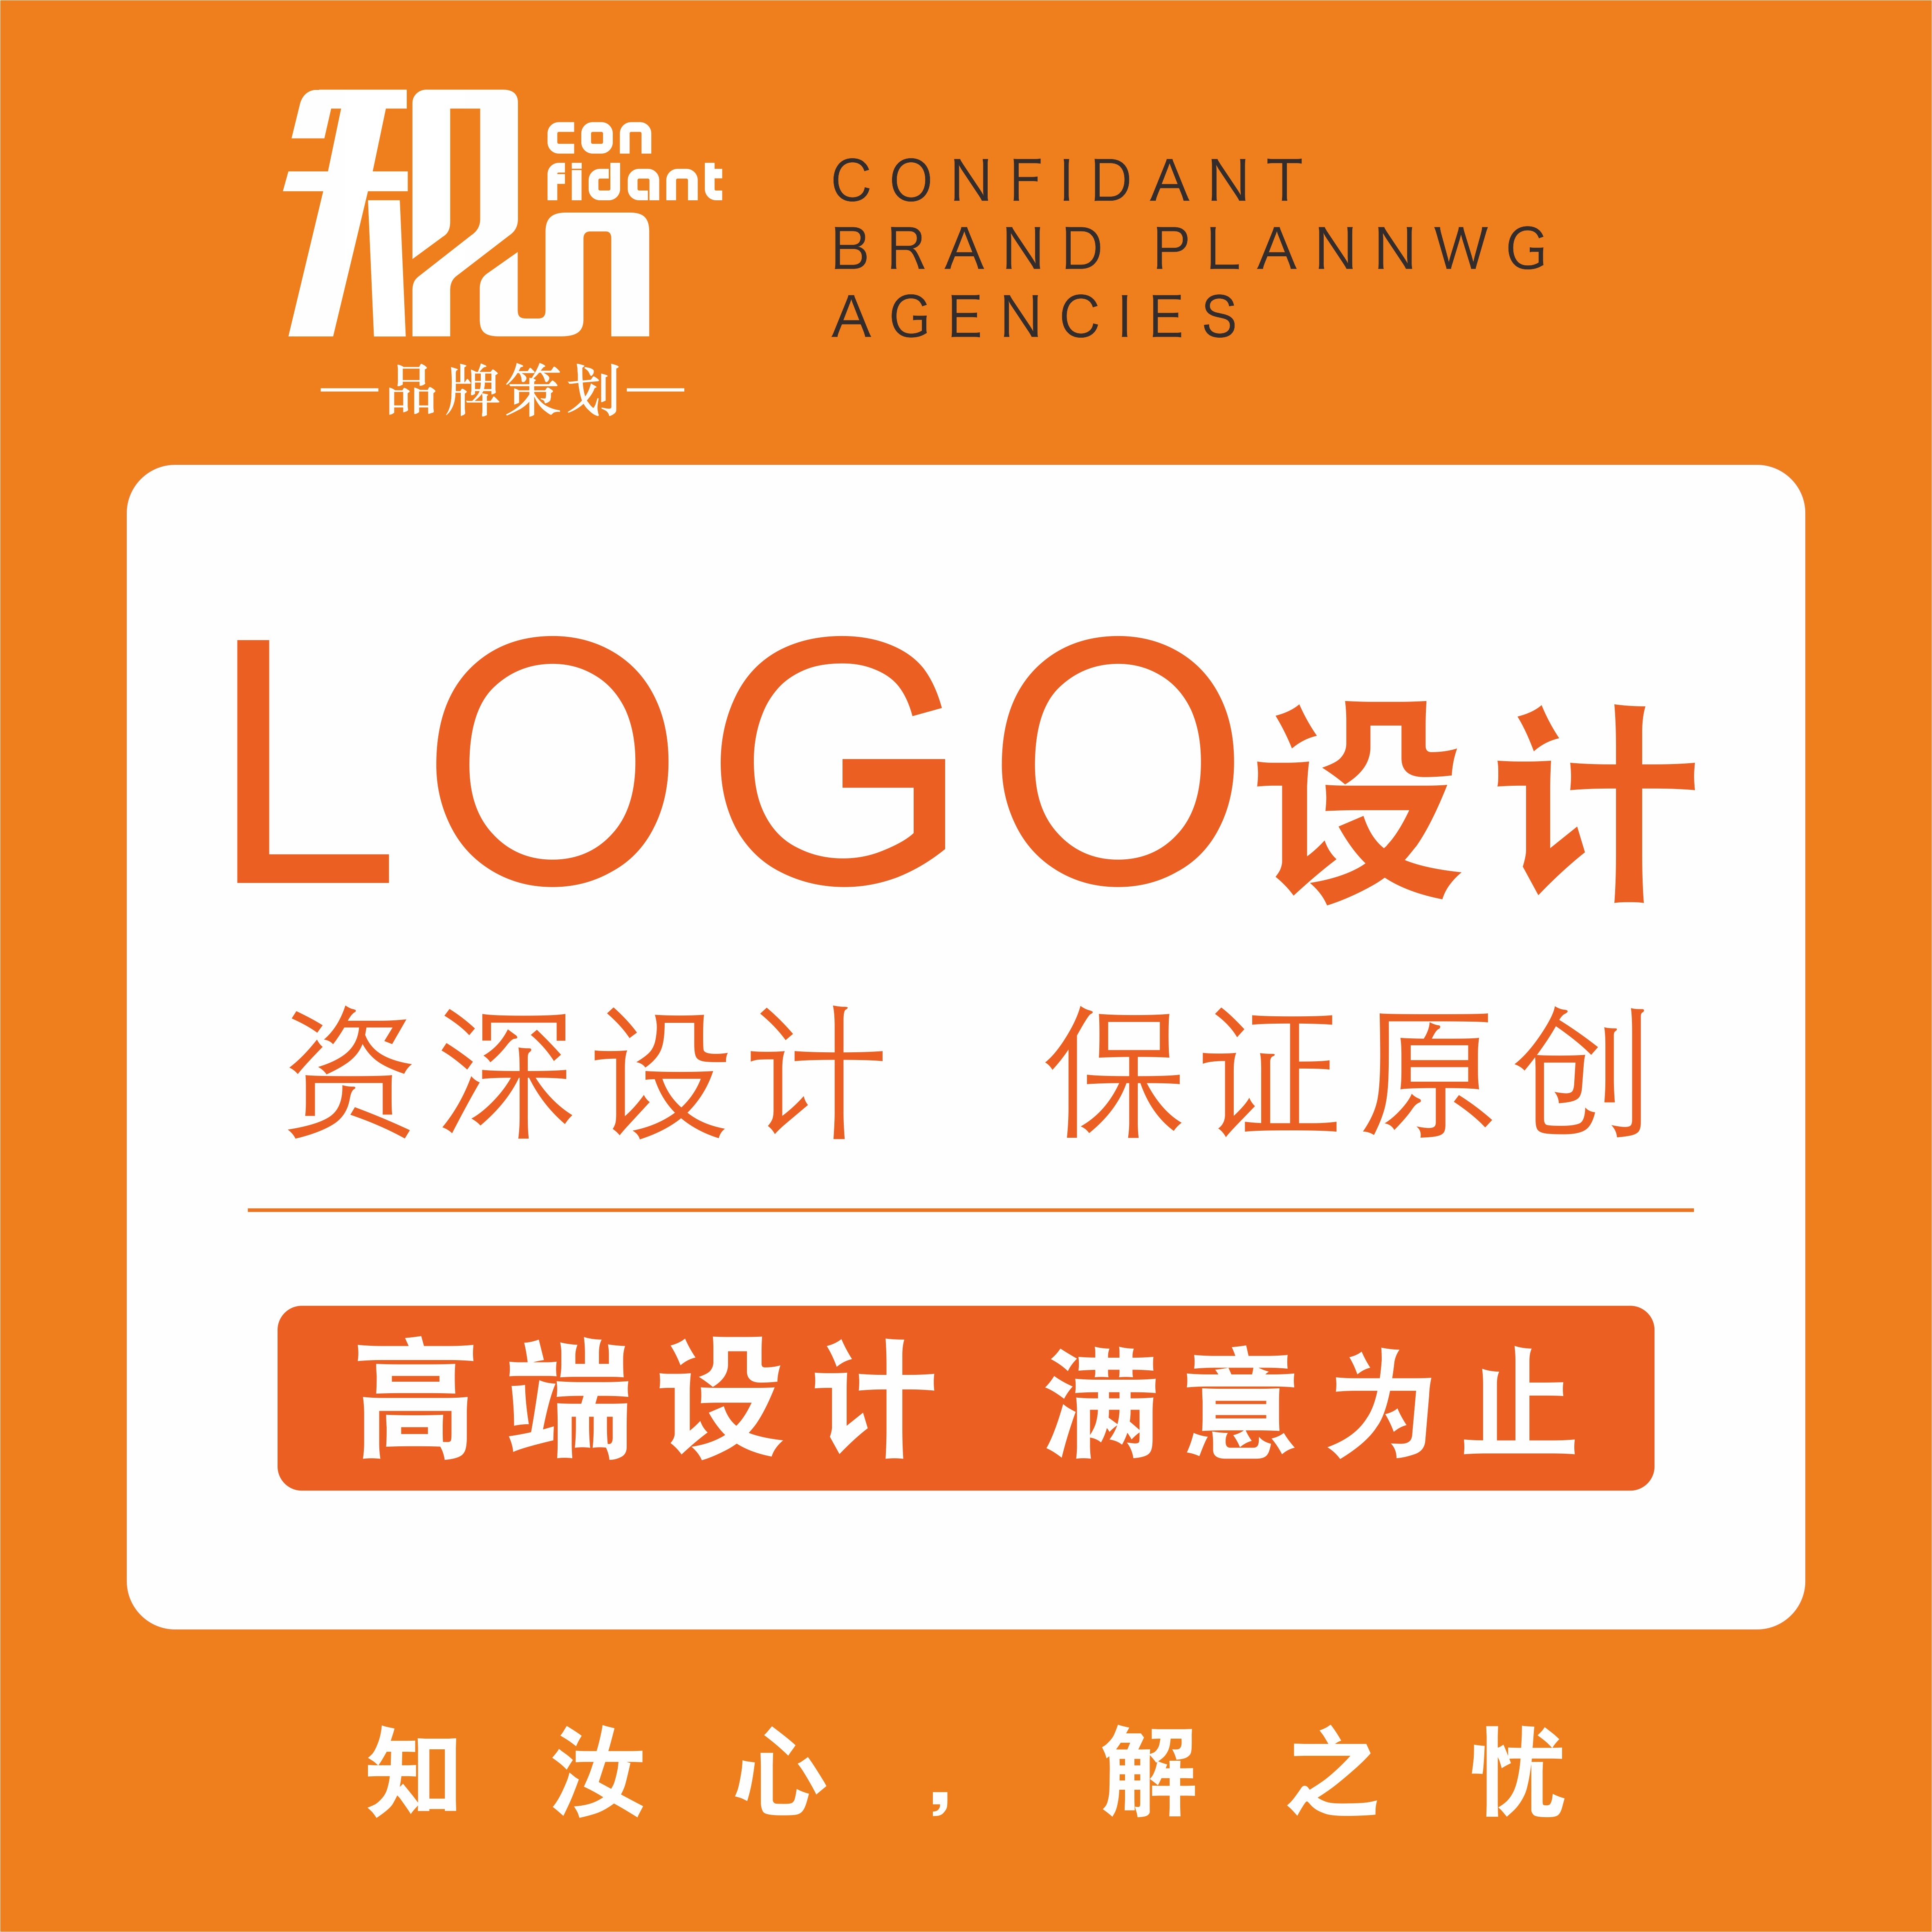 LOGO设计企业公司产品品牌标志商标设计餐饮卡通LOGO设计